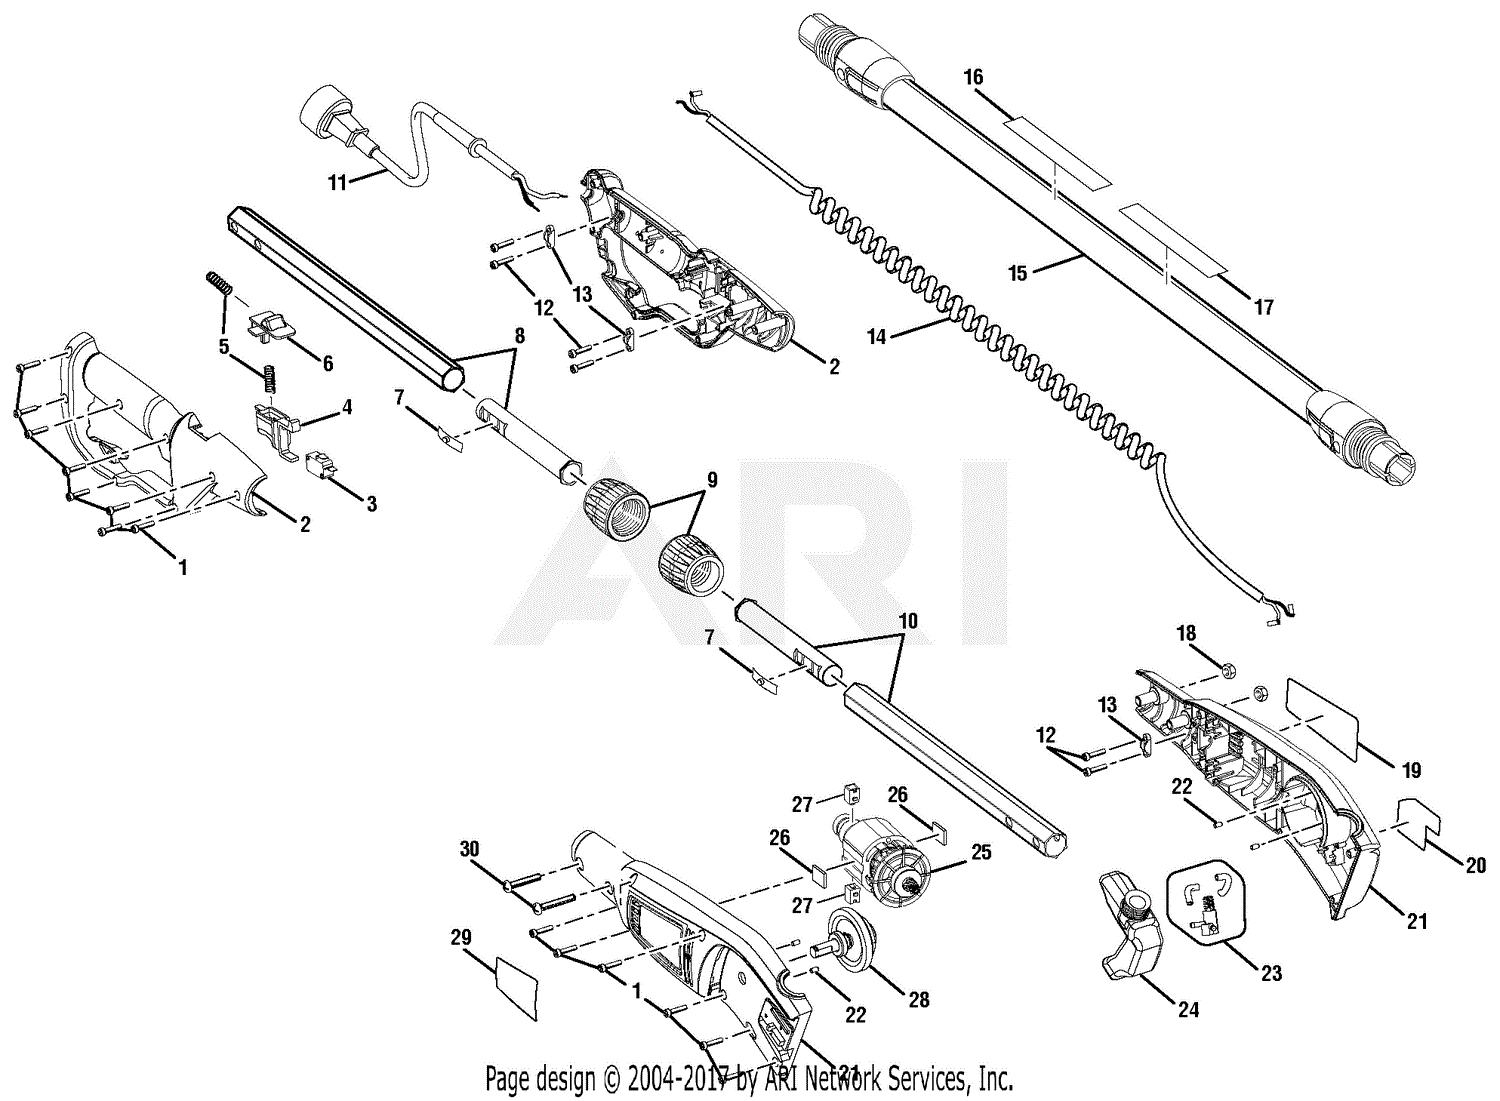 33 Remington Pole Saw Parts Diagram Wiring Diagram List